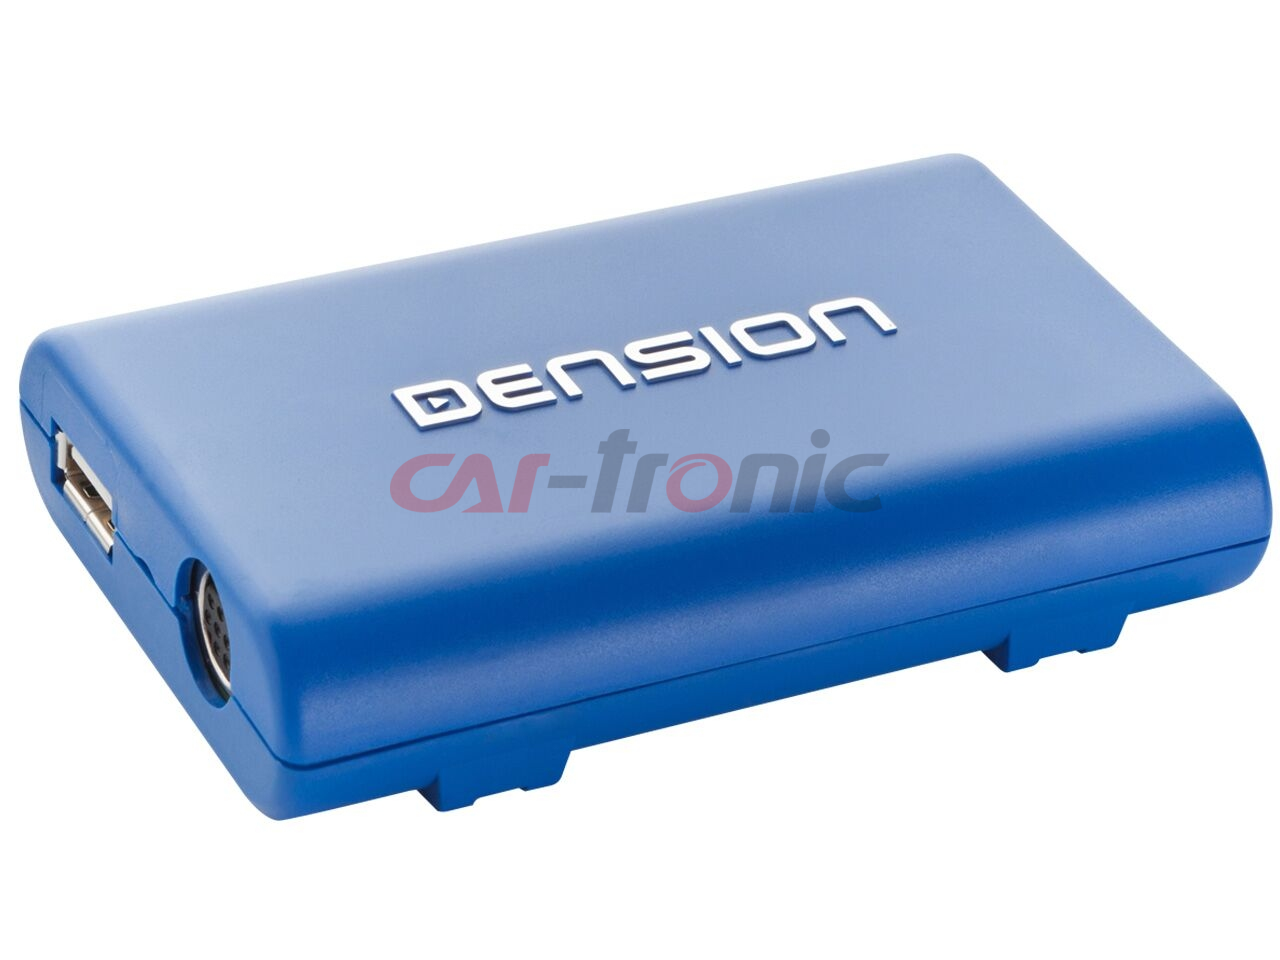 Cyfrowa zmieniarka Dension Bluetooth,USB,iPod,iPhone,AUX - Fiat Panda 2013 Basic Continental